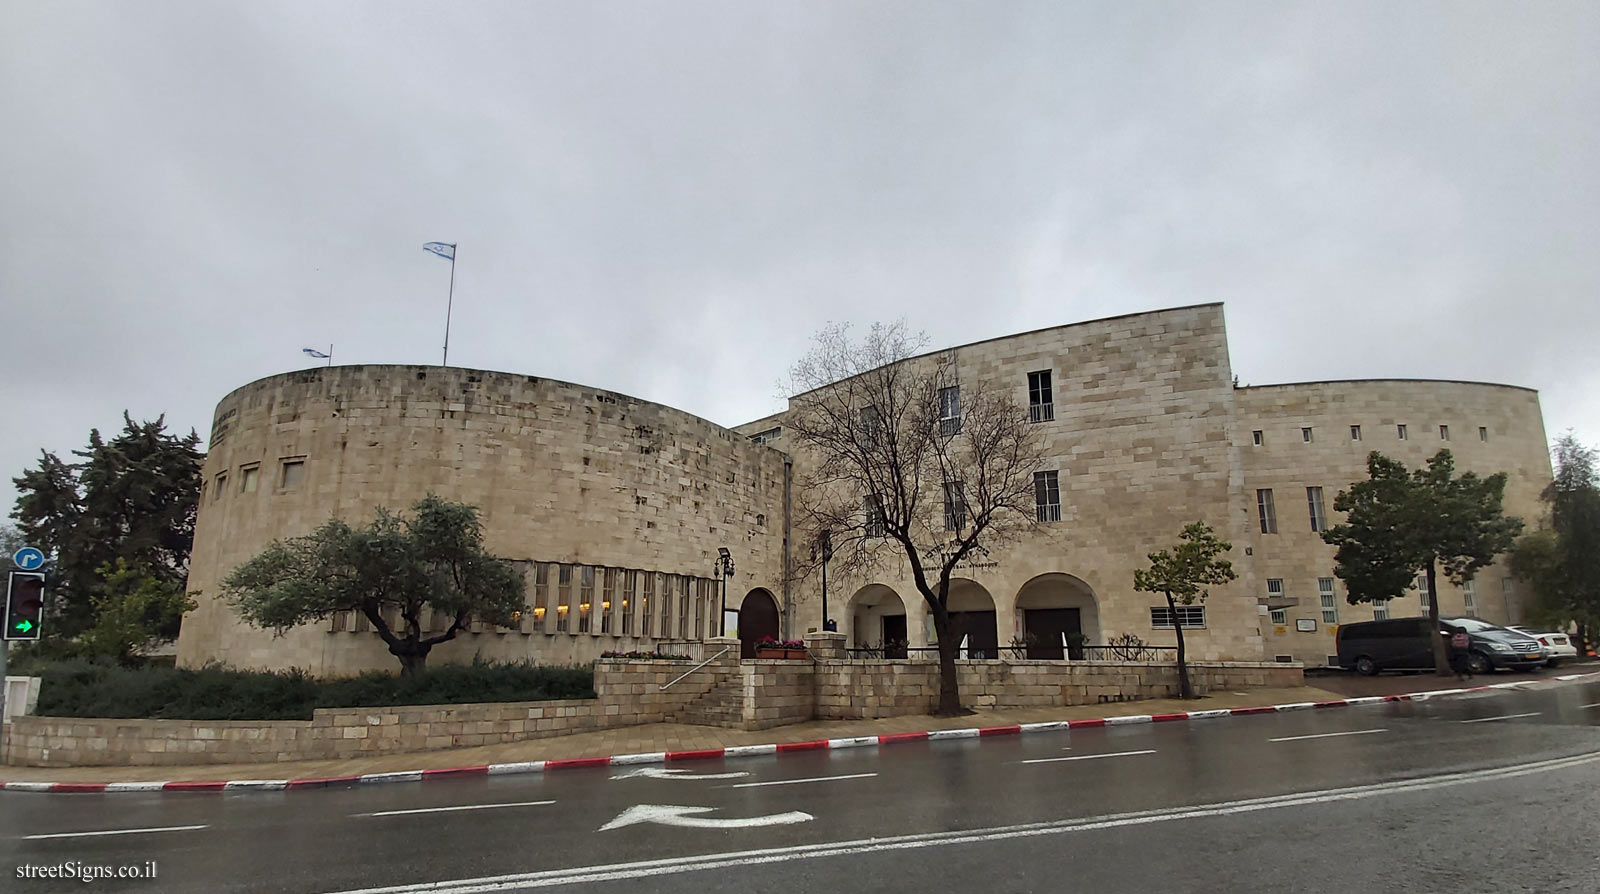 Yeshurun Synagogue - King George St 44, Jerusalem, Israel